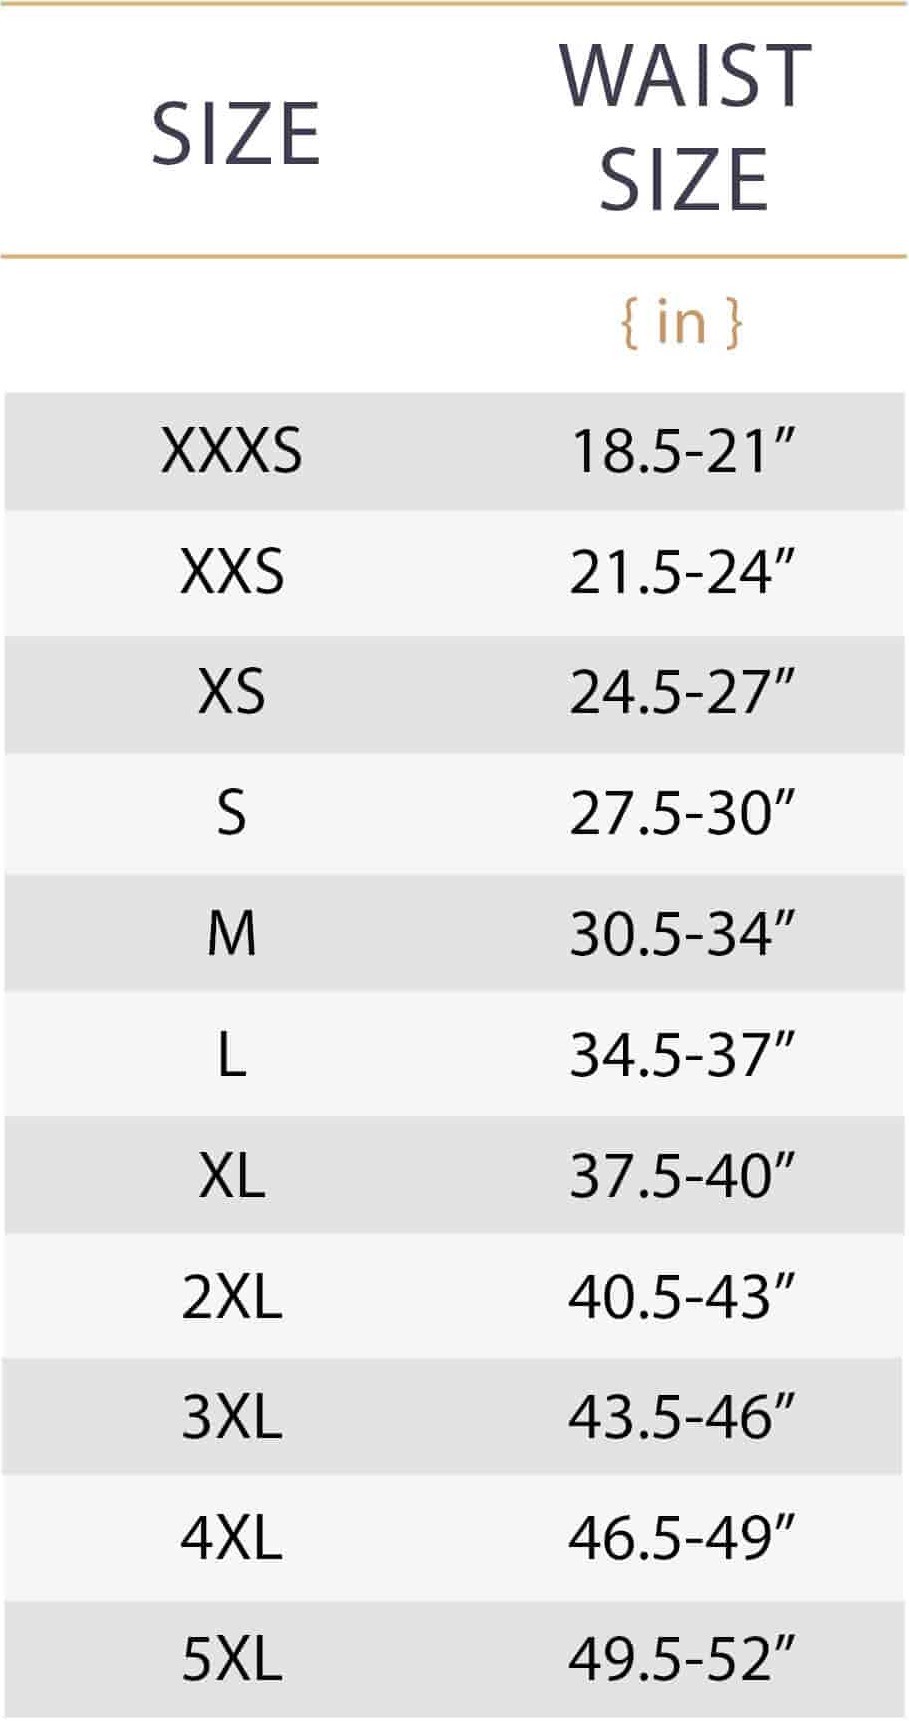 hga-size-chart-waist-xxs-5xl.jpg